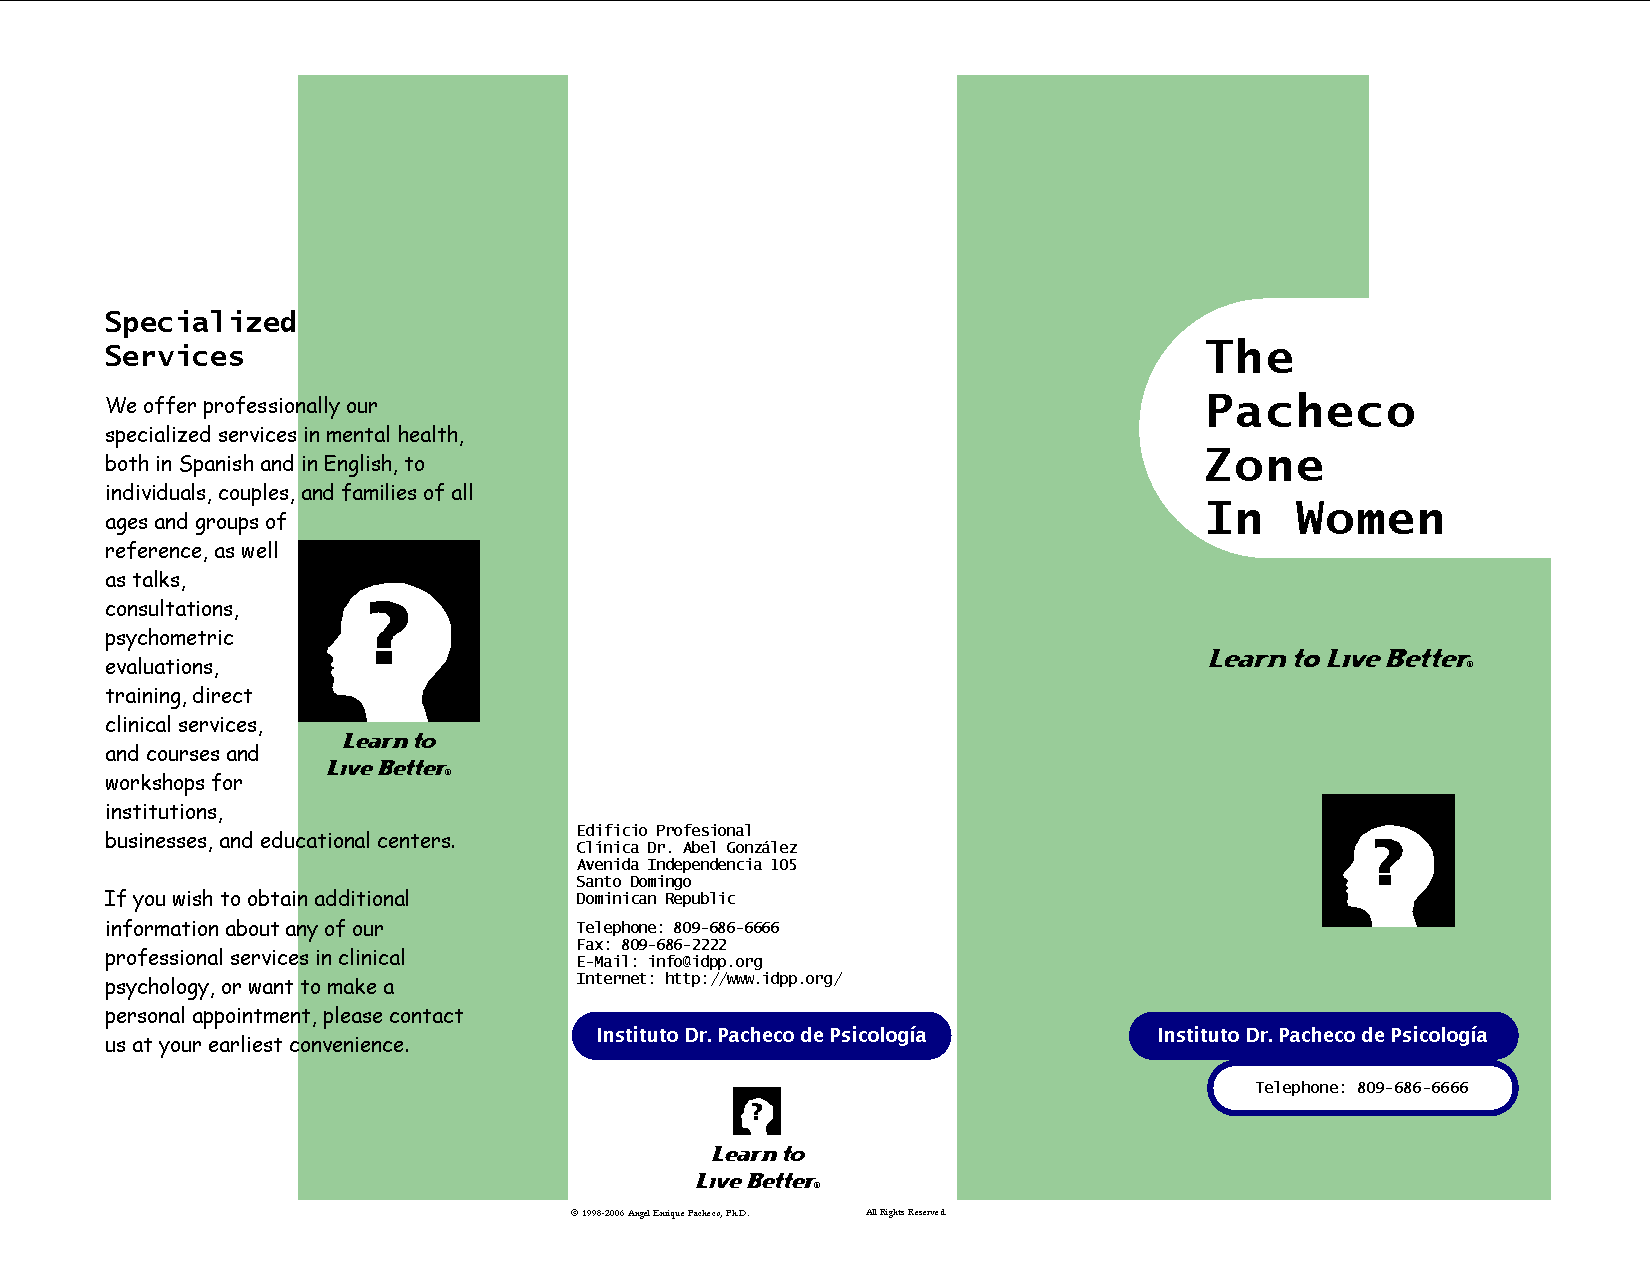 The Pacheco Zone in Women, P. 1